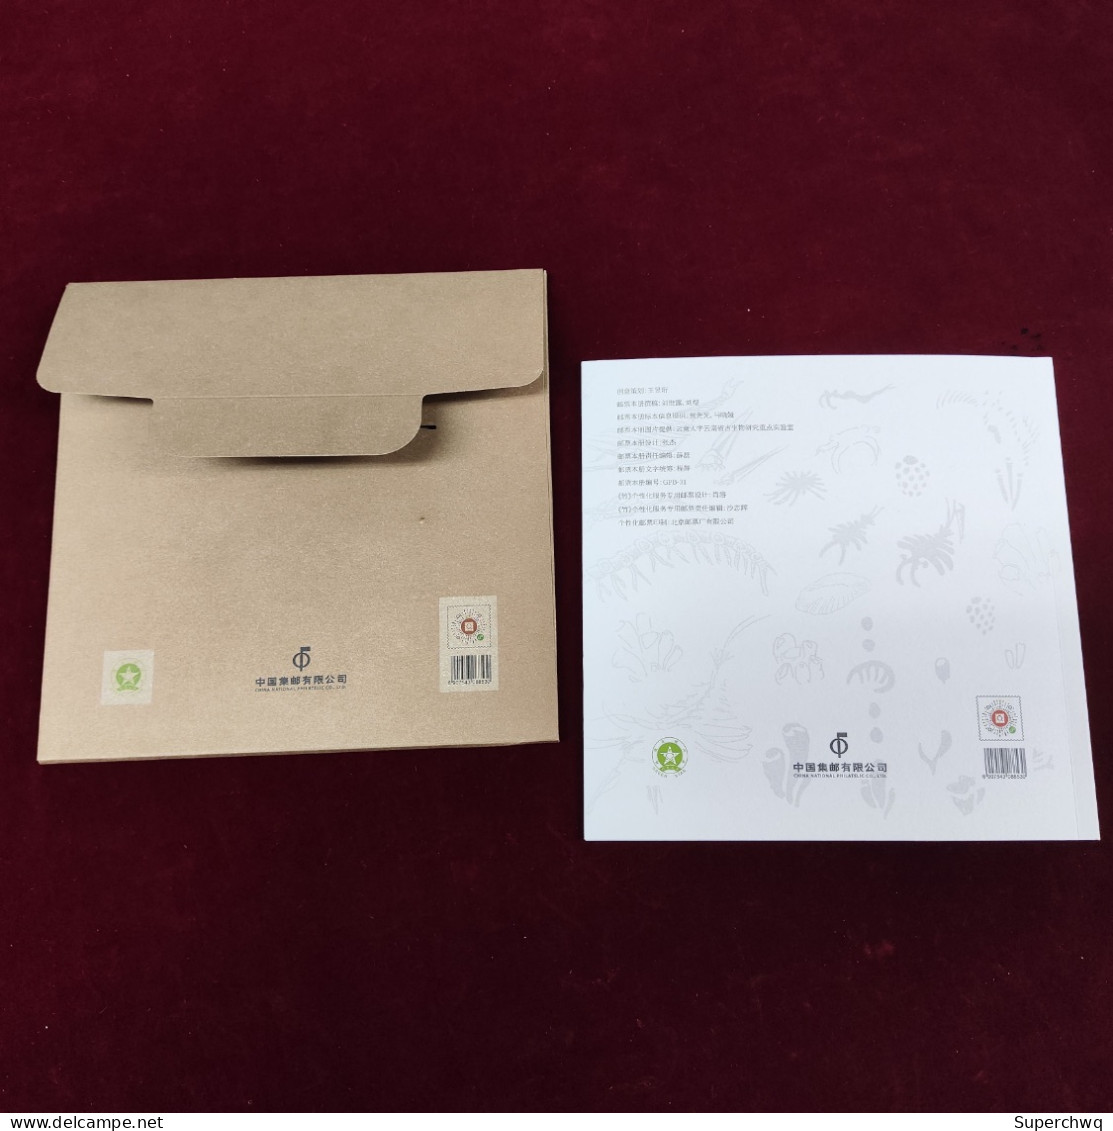 China stamp GPB-31 2024-4 "World Natural Heritage - Chengjiang Fossil Land" Personalized Ticket Book